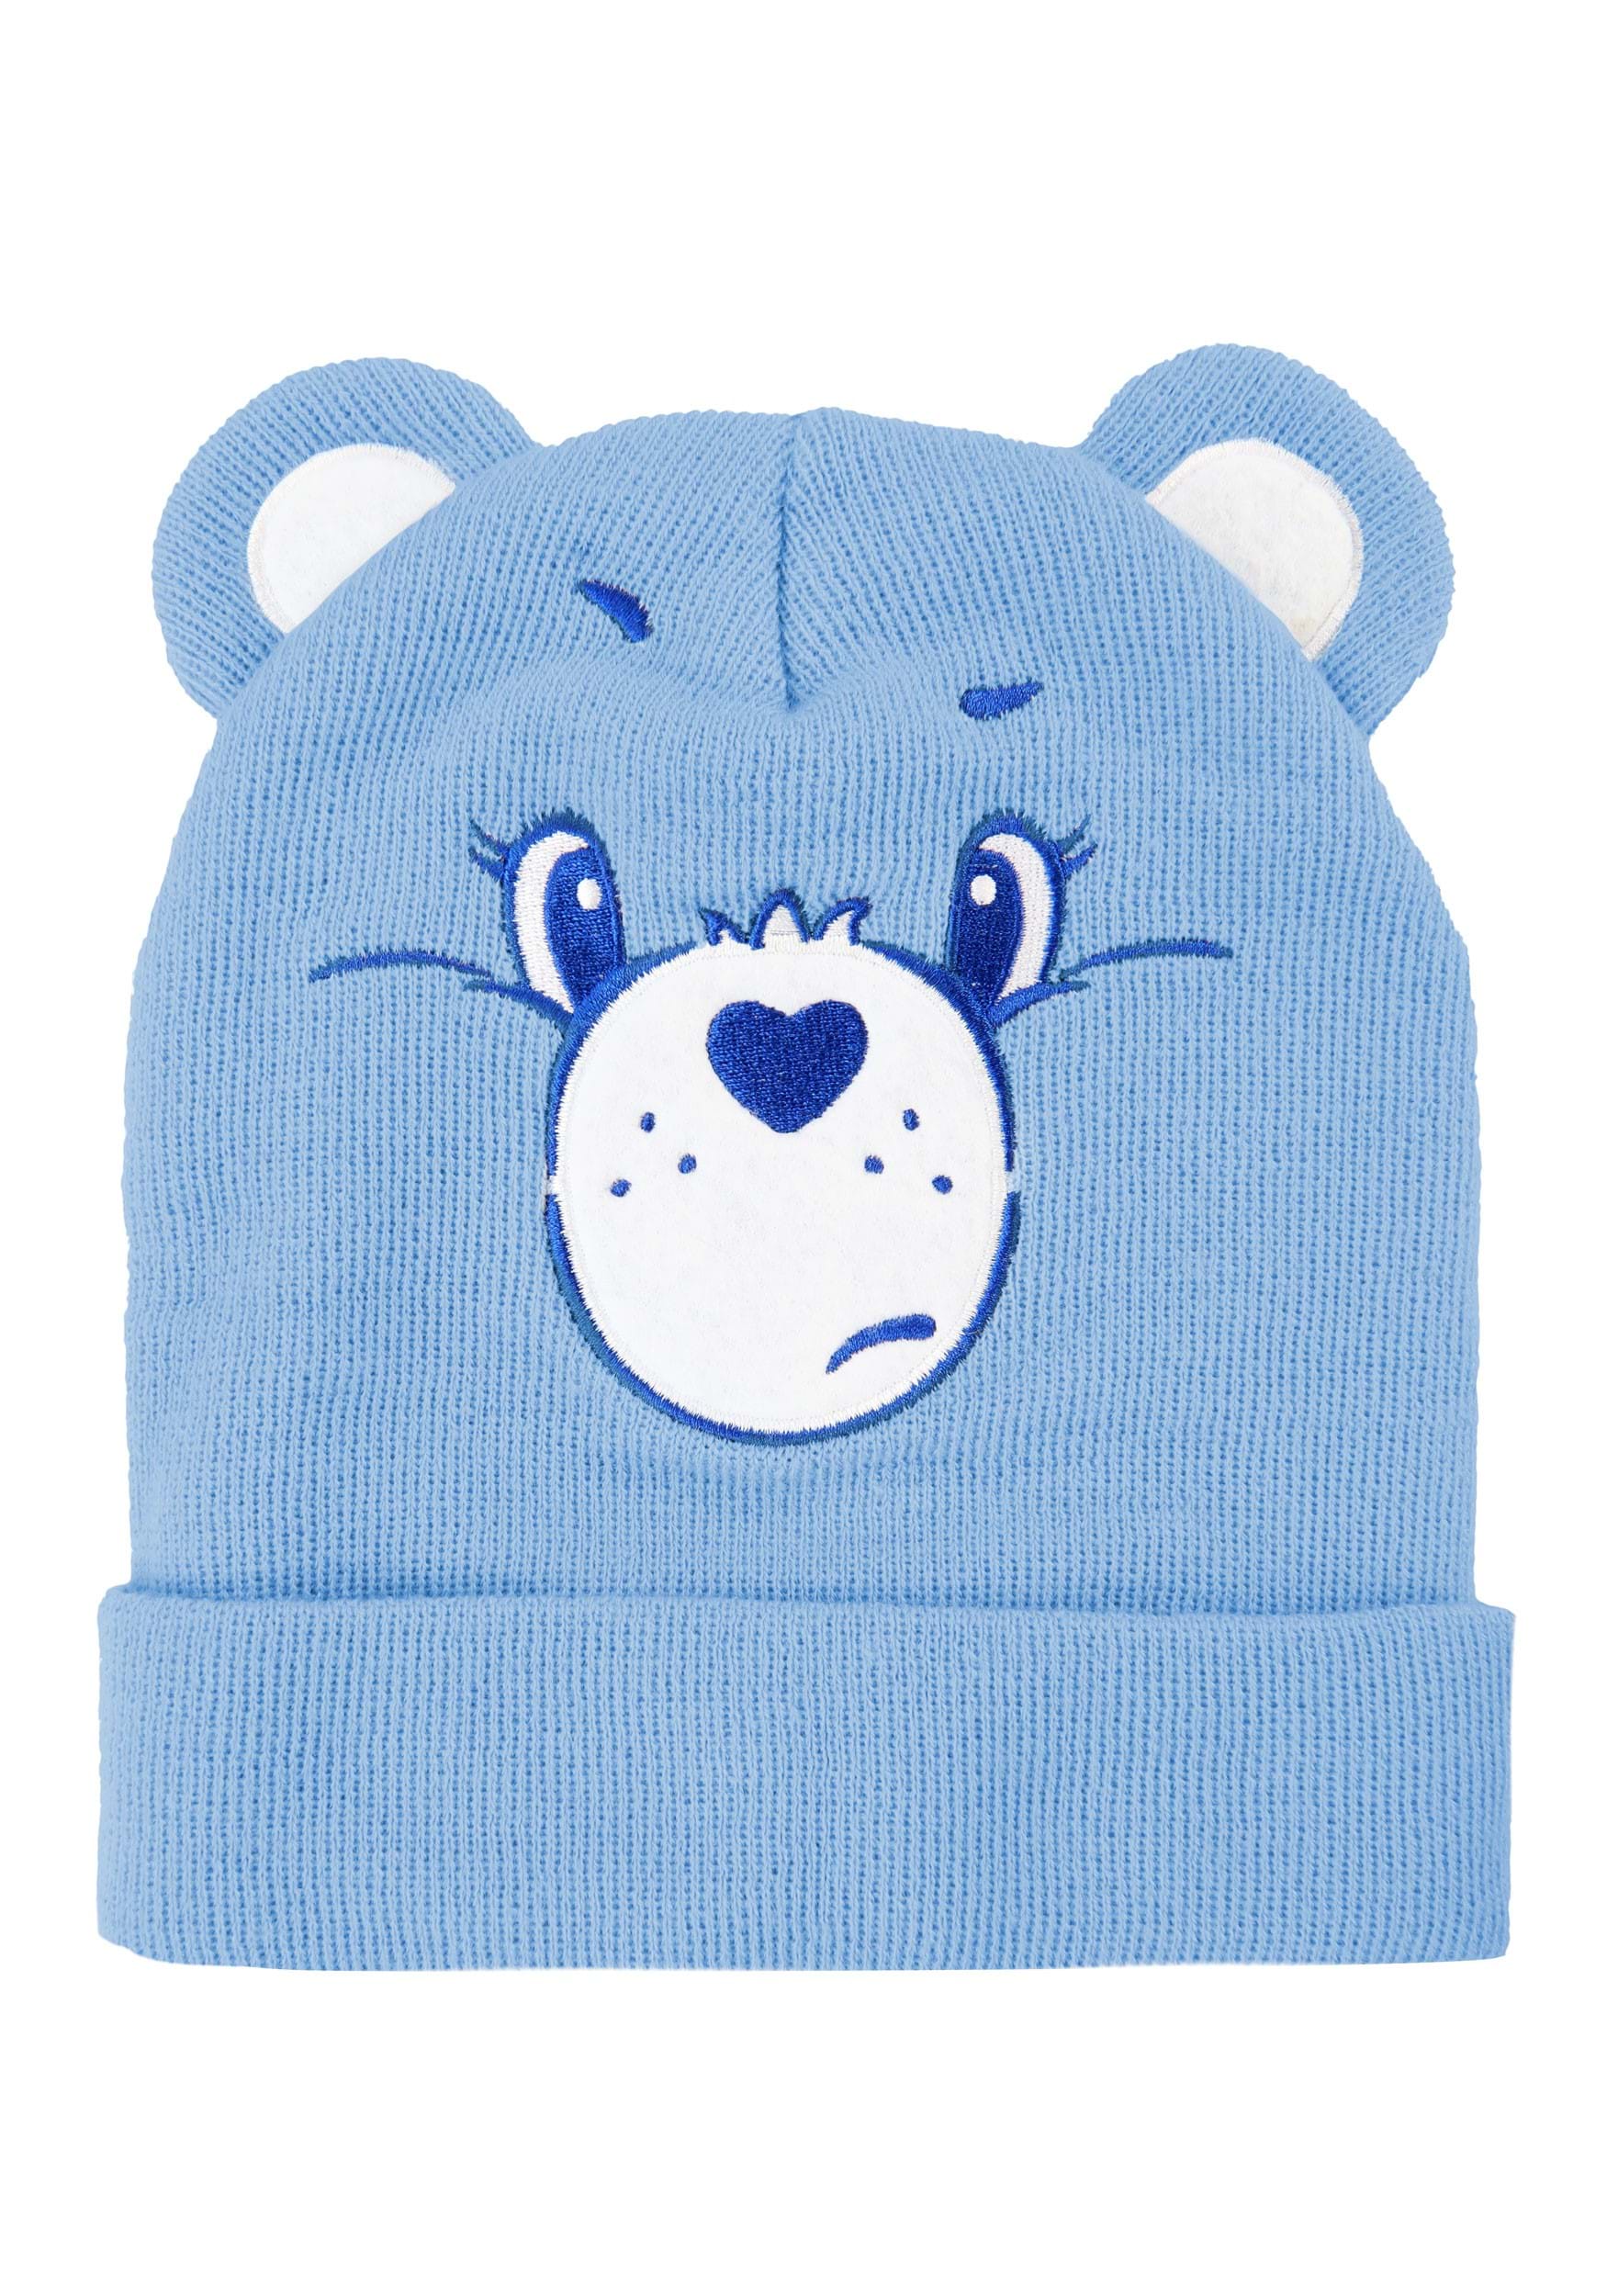 Care Bears Grumpy Bear Knit Hat , Care Bears Accessories